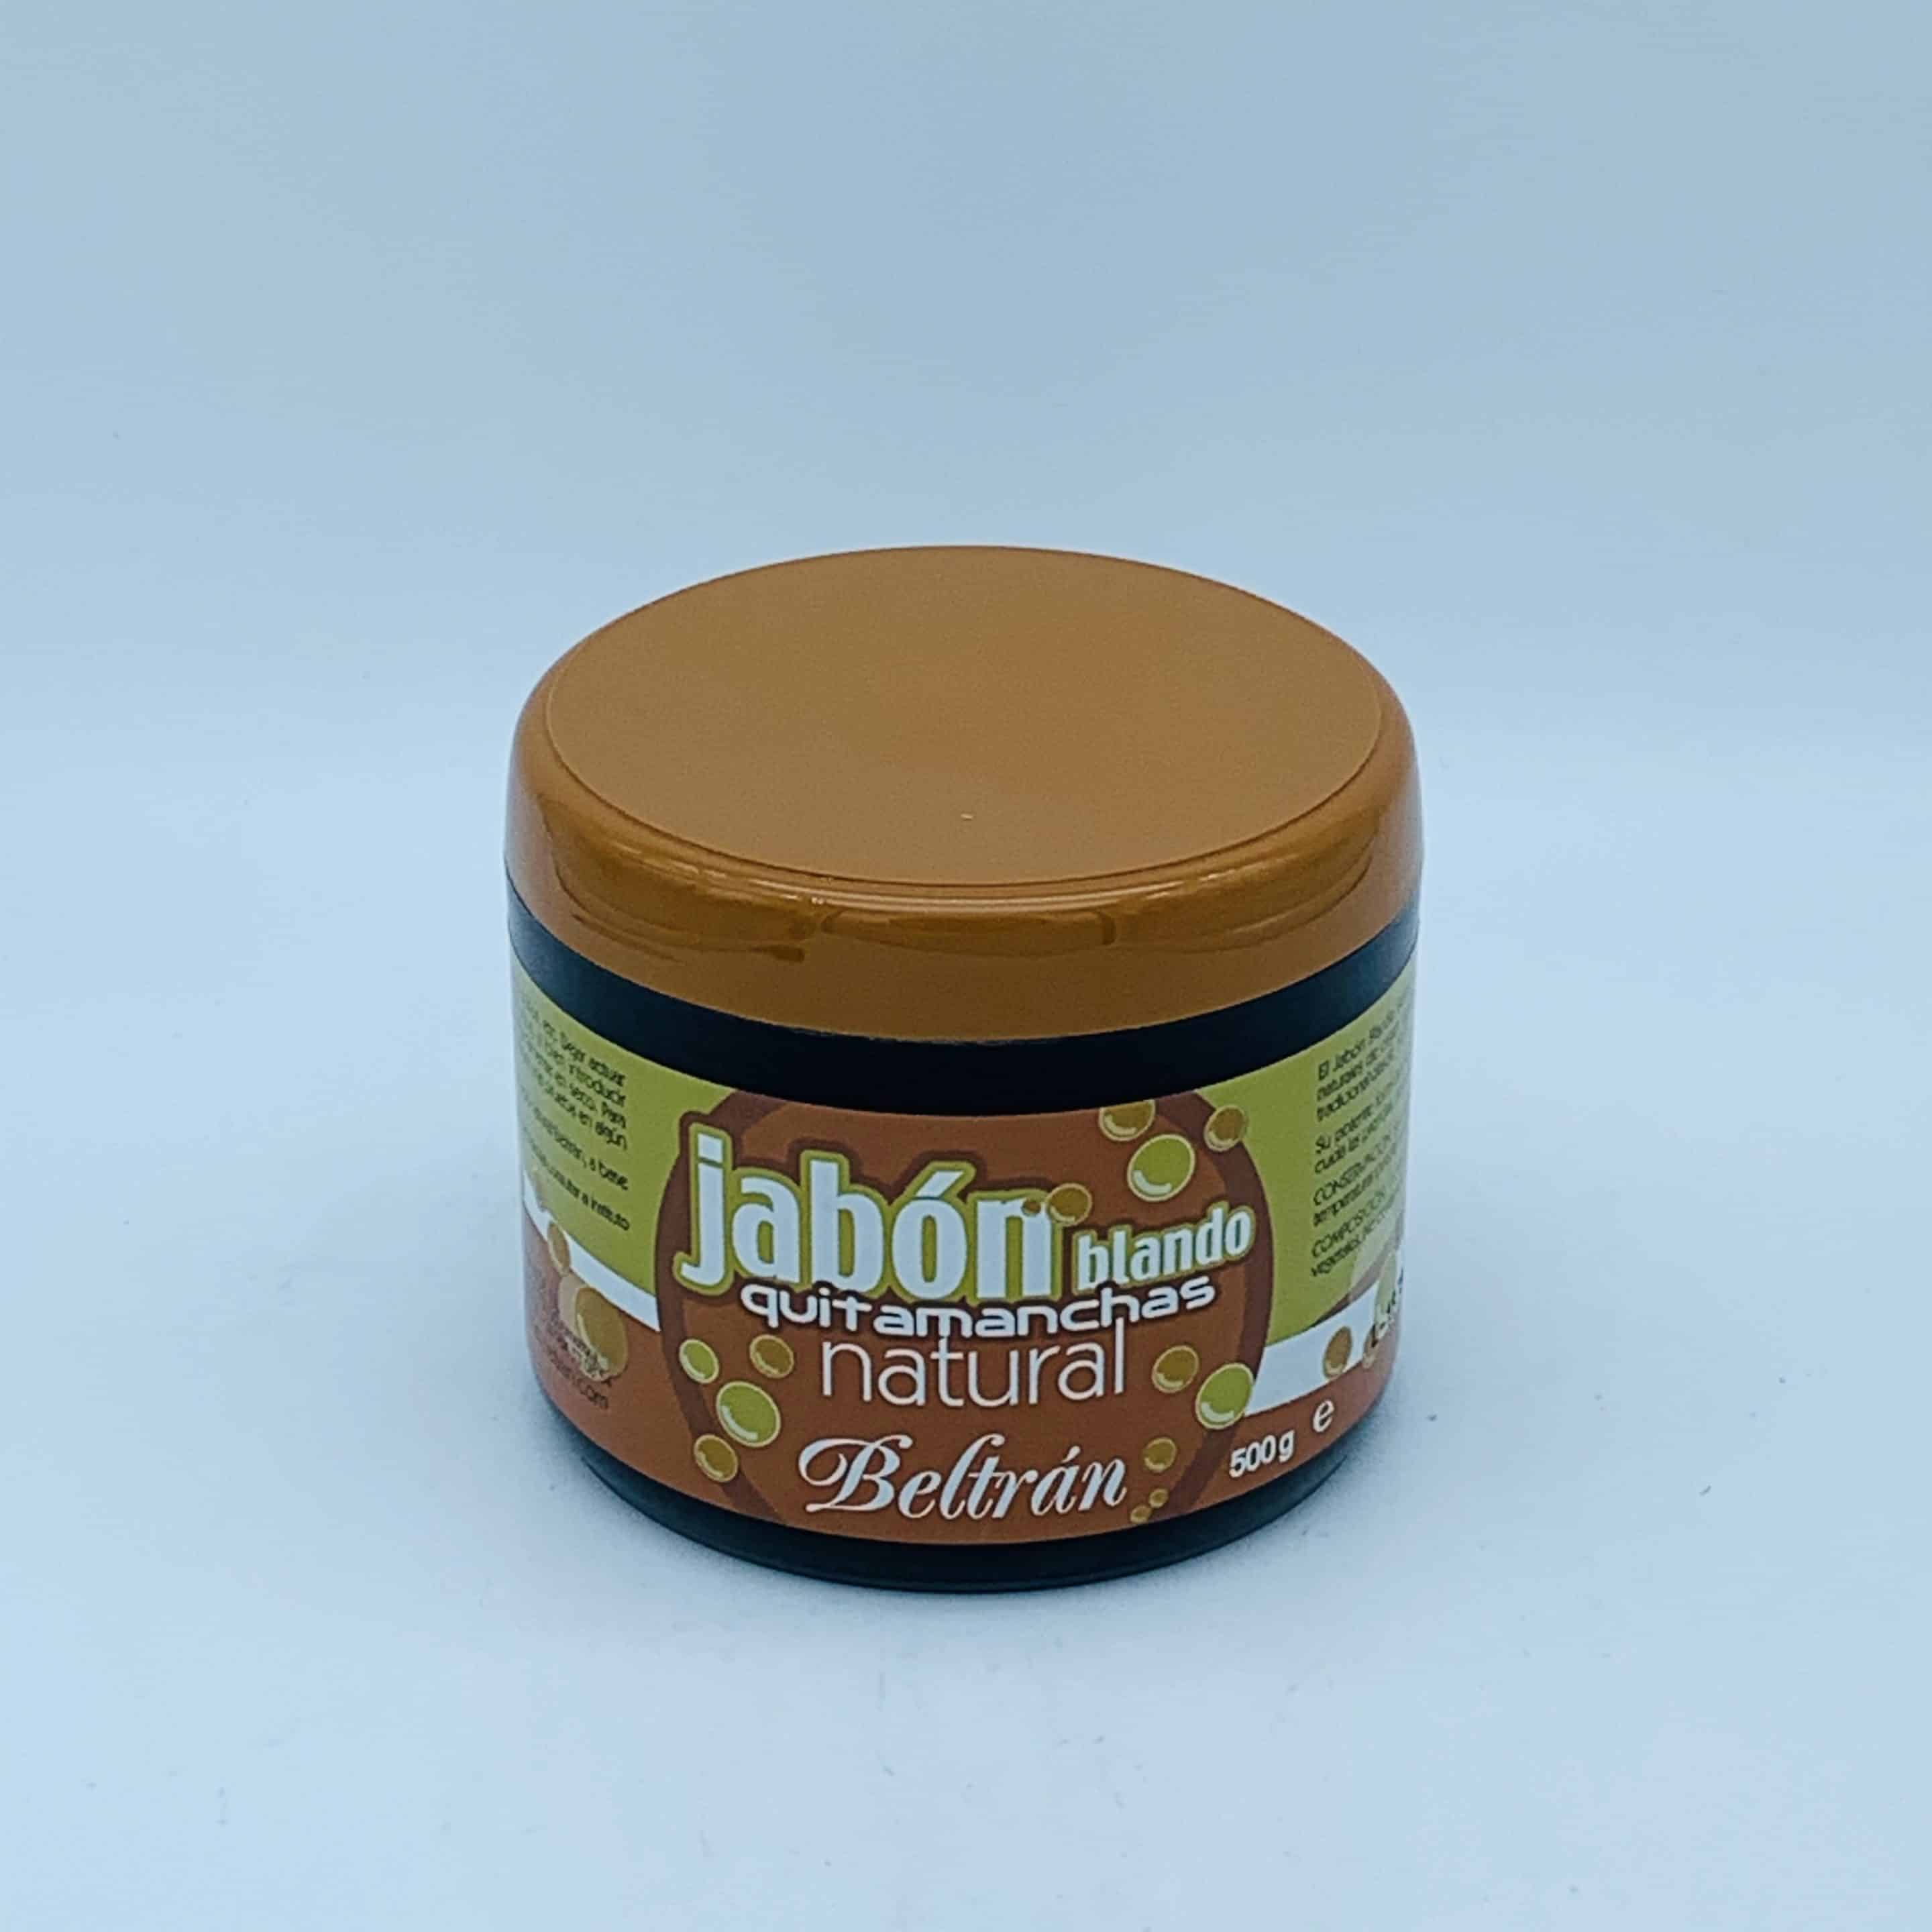 Jabón blando quitamanchas - Beltrán - 500g